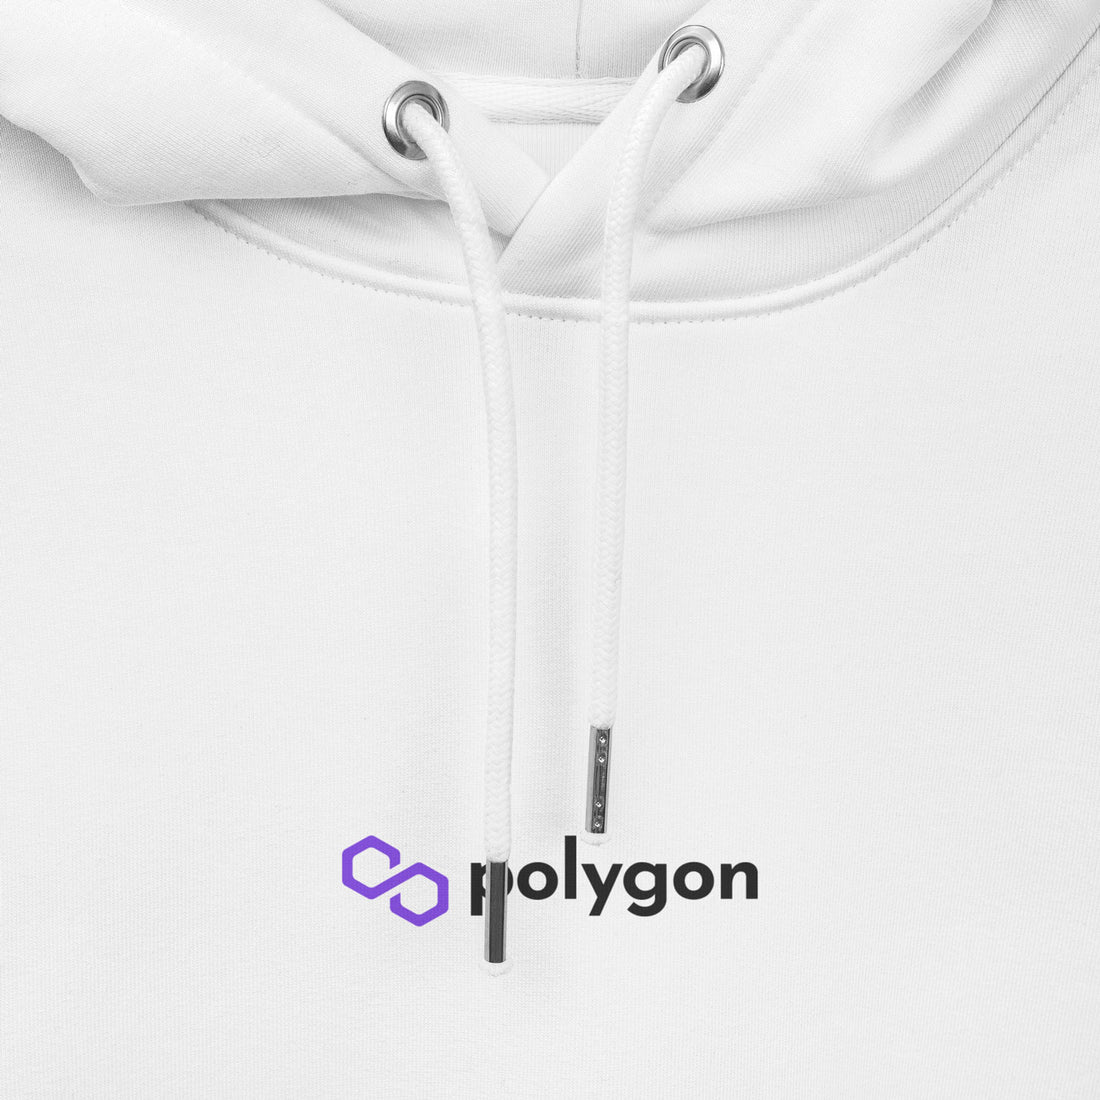 polygon logo hoodie white